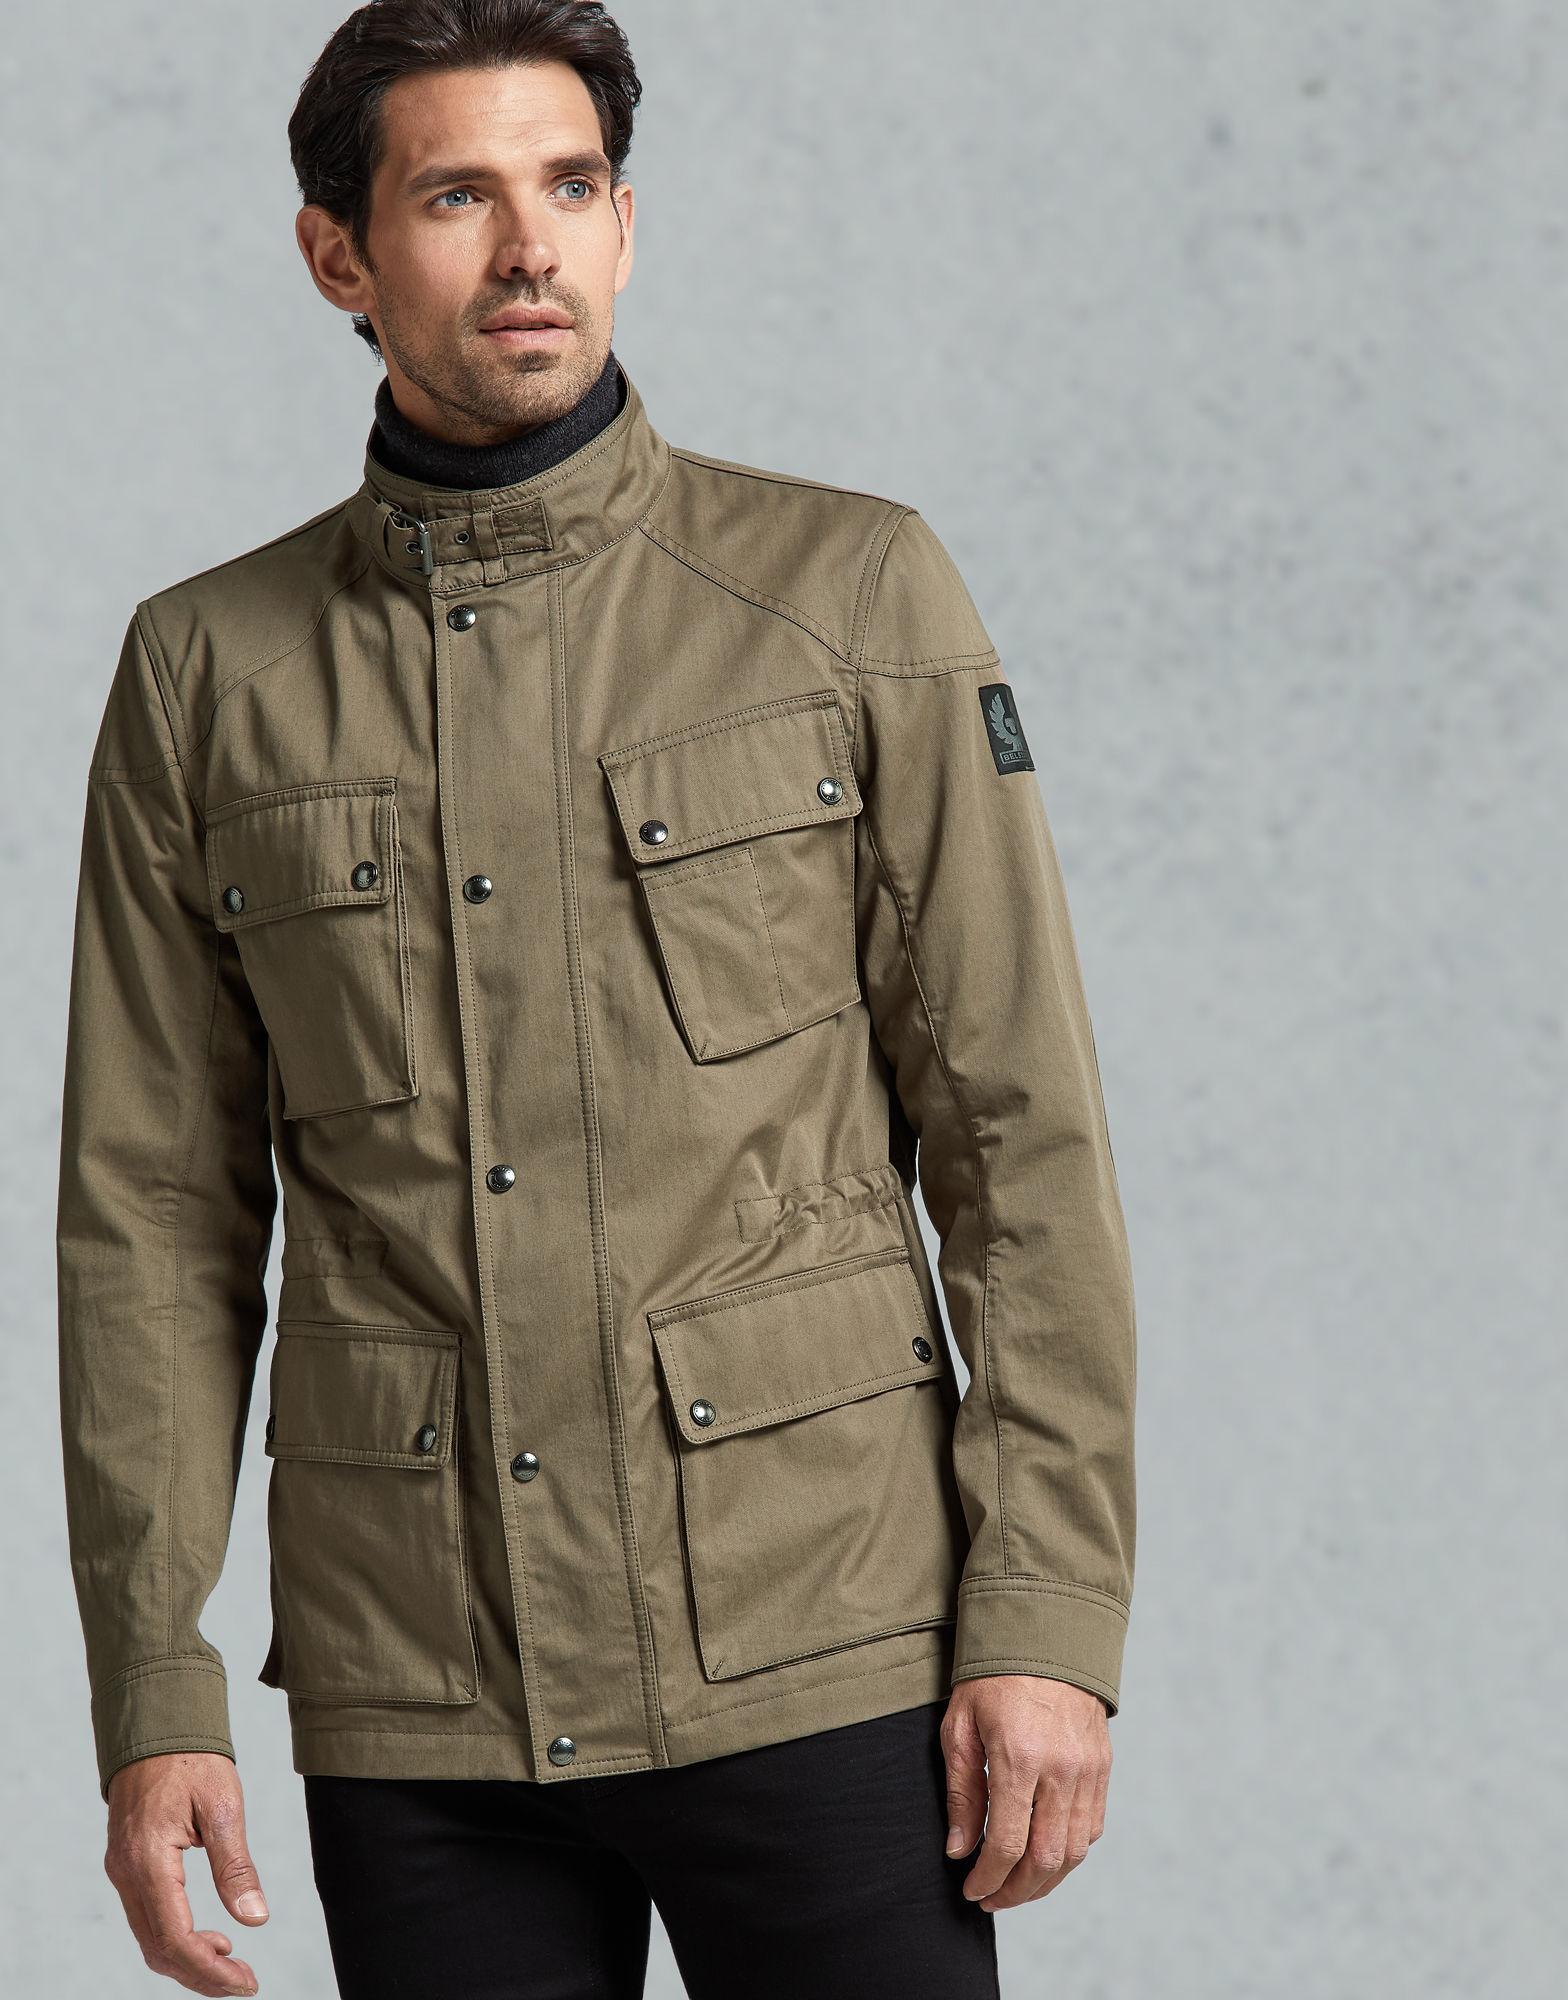 belstaff fieldmaster jacket review